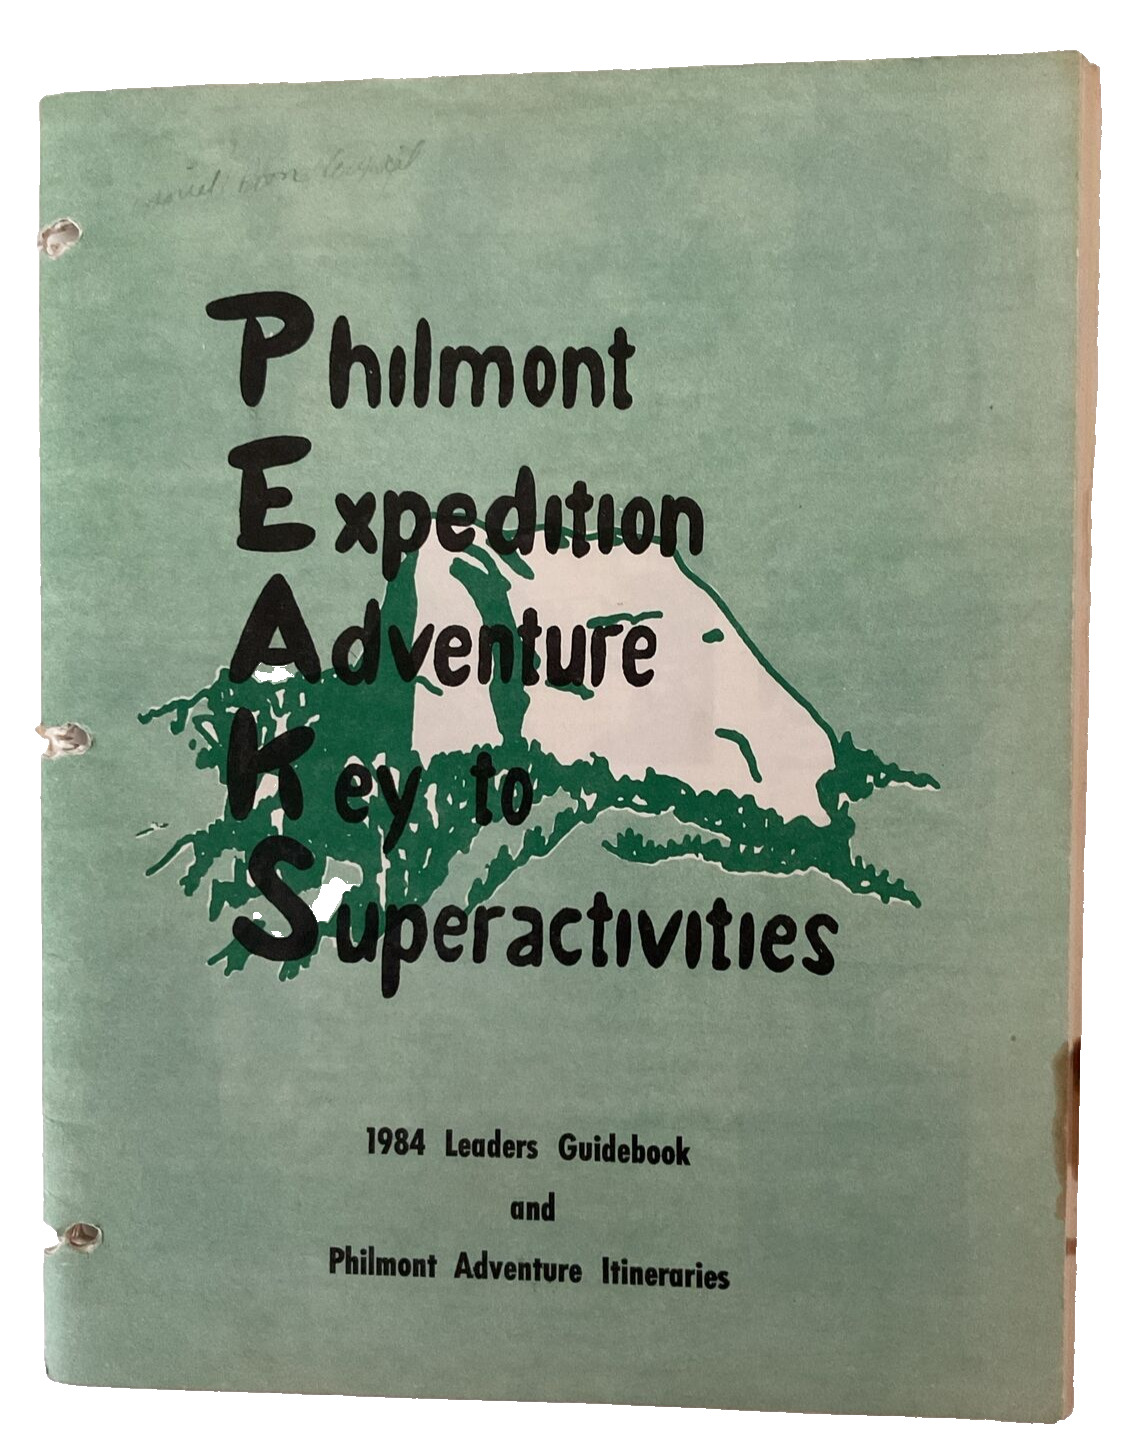 Philmont Expedition Adventure  Key to Superactivities Leader GuideBook 1984/BSA